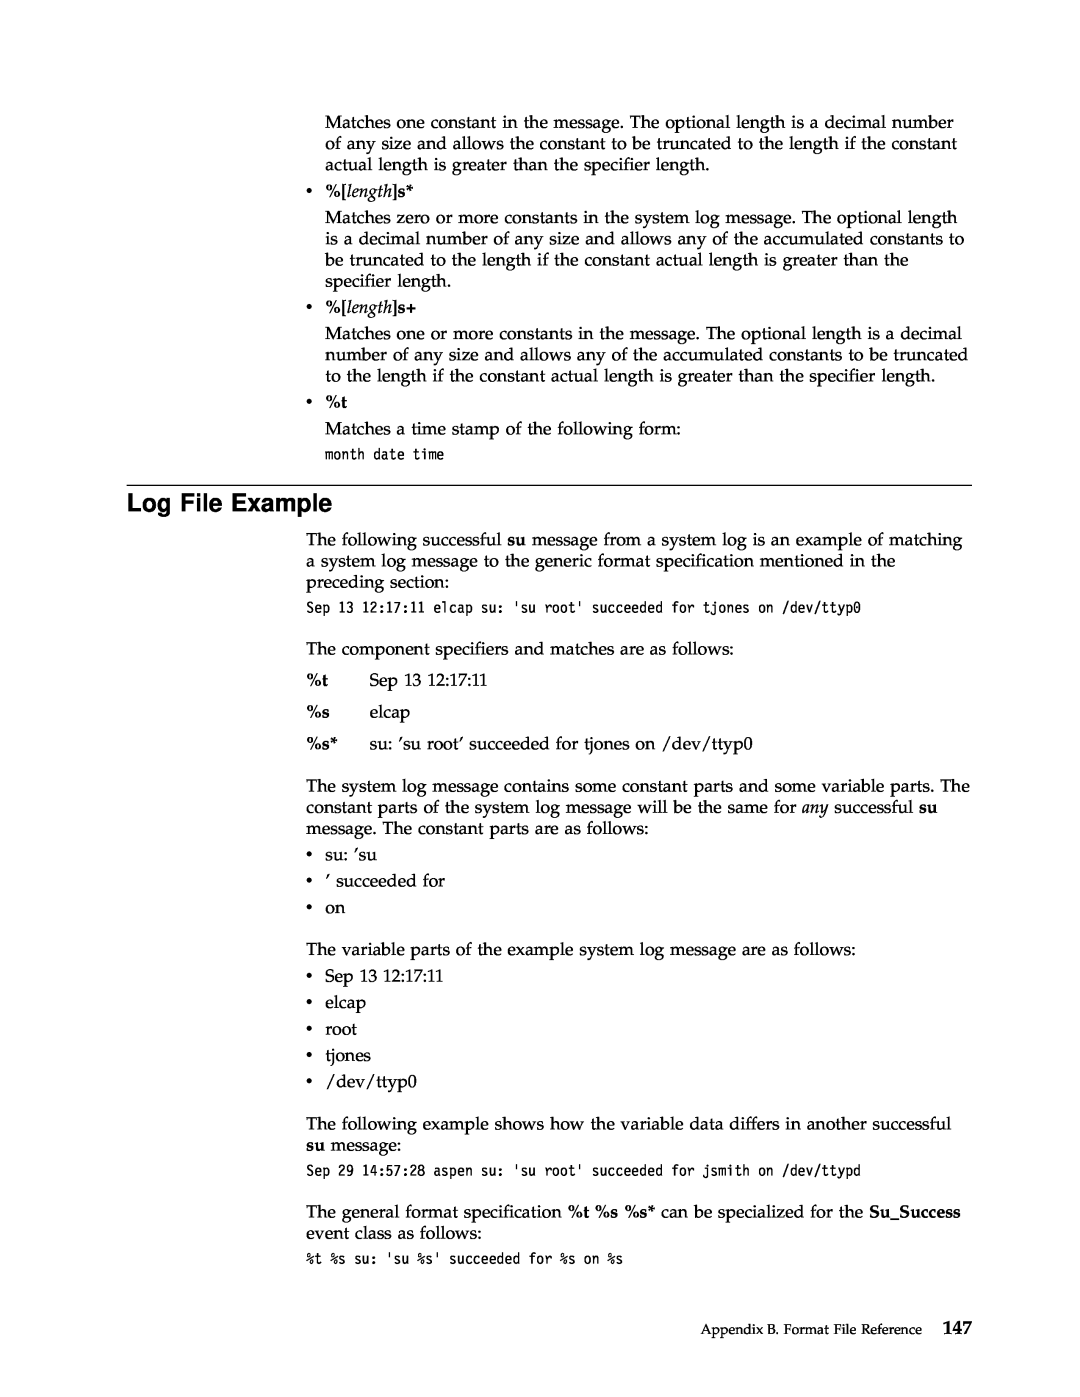 IBM Enterprise Console manual Log File Example, v %lengths+, v %t 